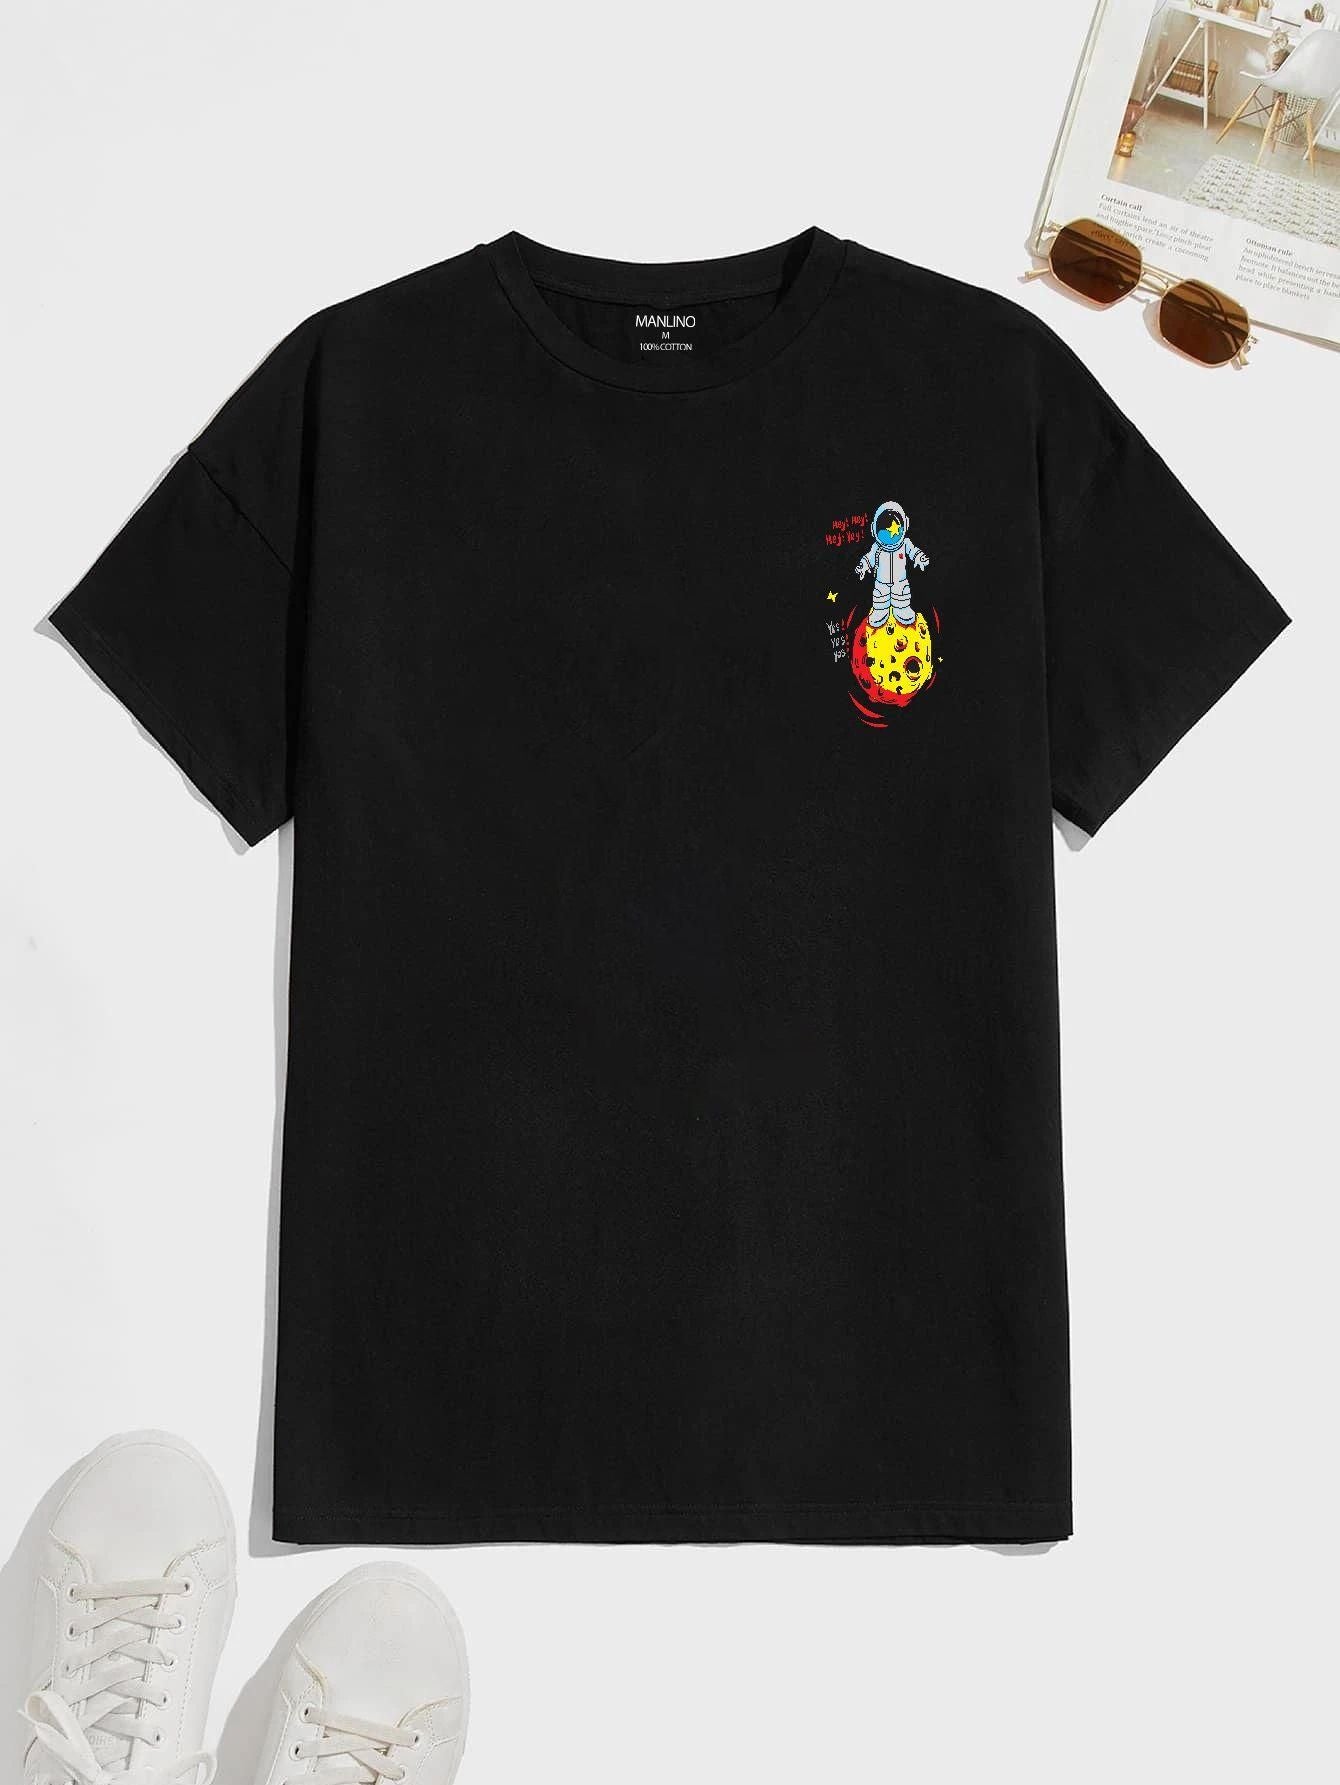 Manlino Men's Black Round Neck Half Sleeve Graphic Print T-Shirt